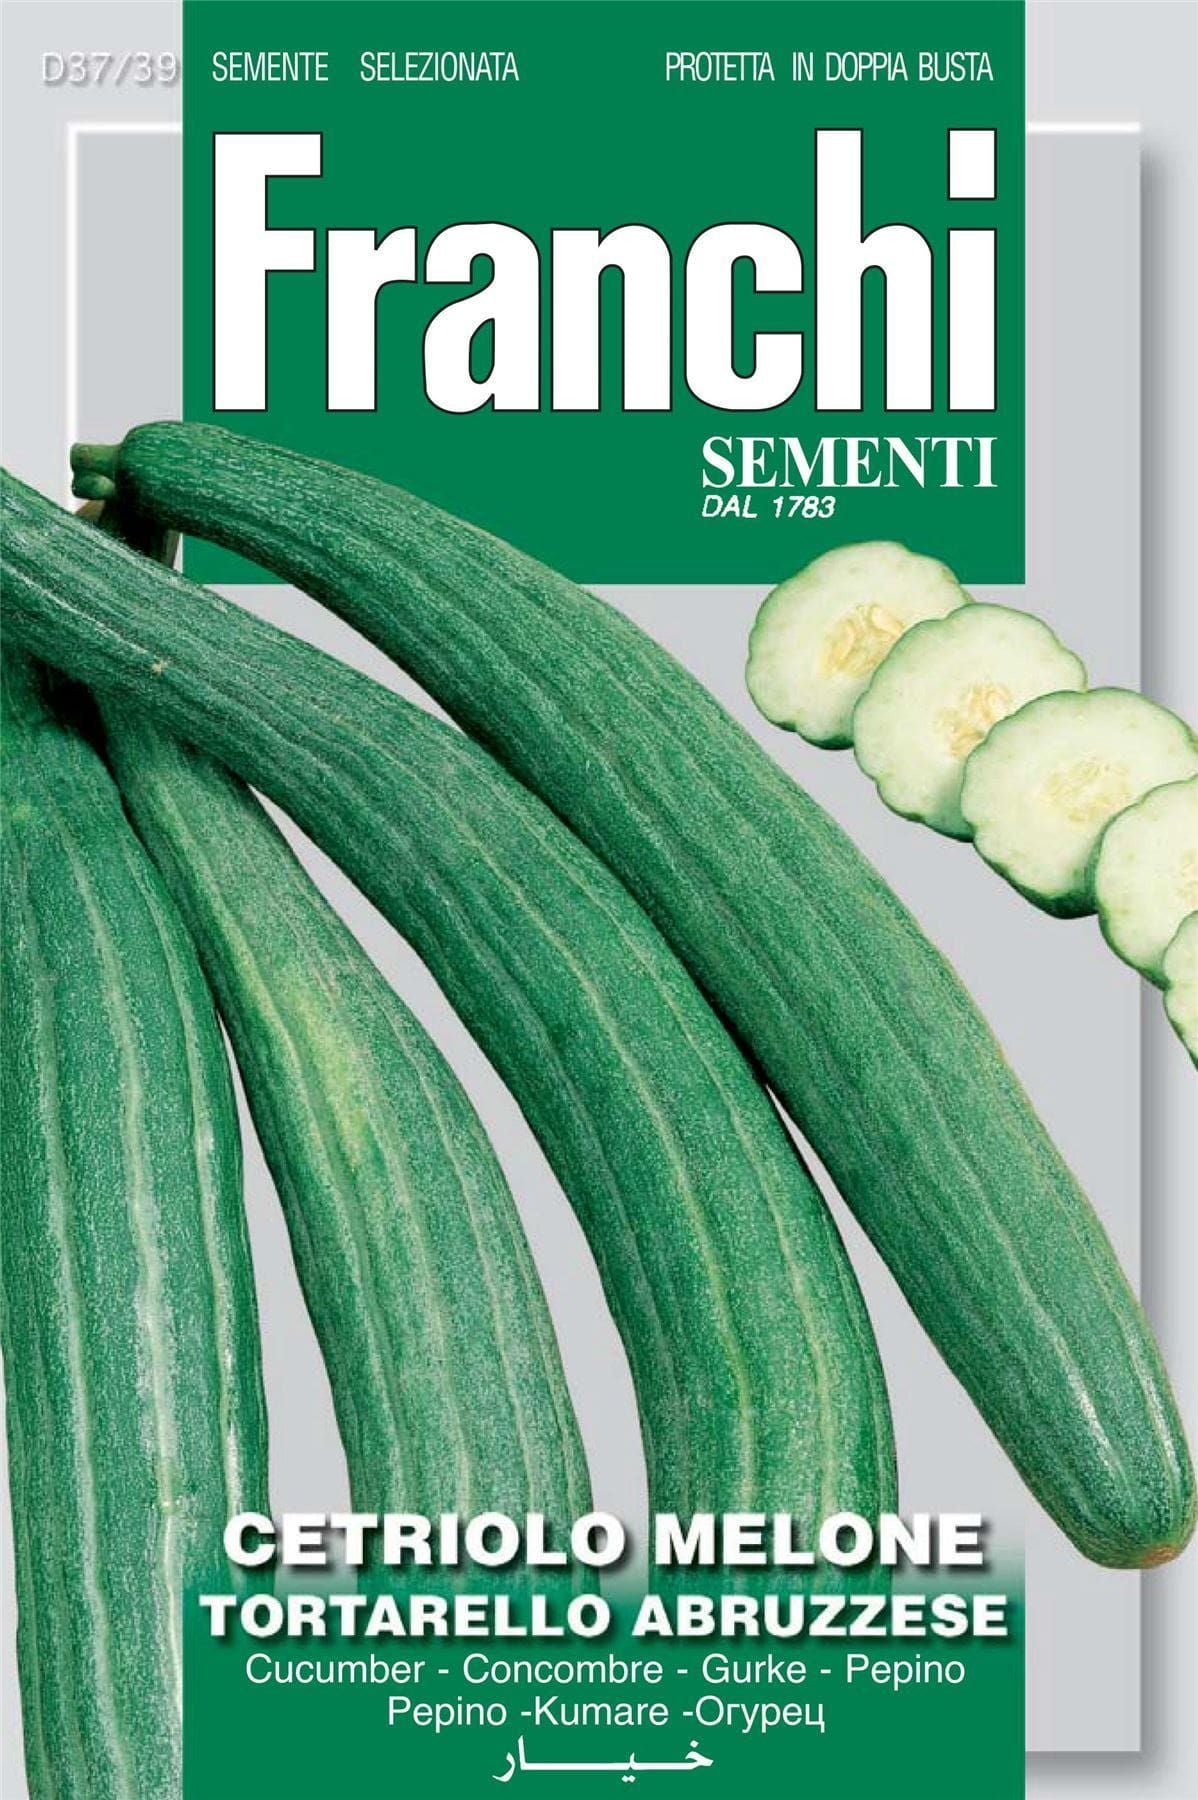 Franchi Seeds of Italy - DBO 37/32 - Cucumber - White Wonder